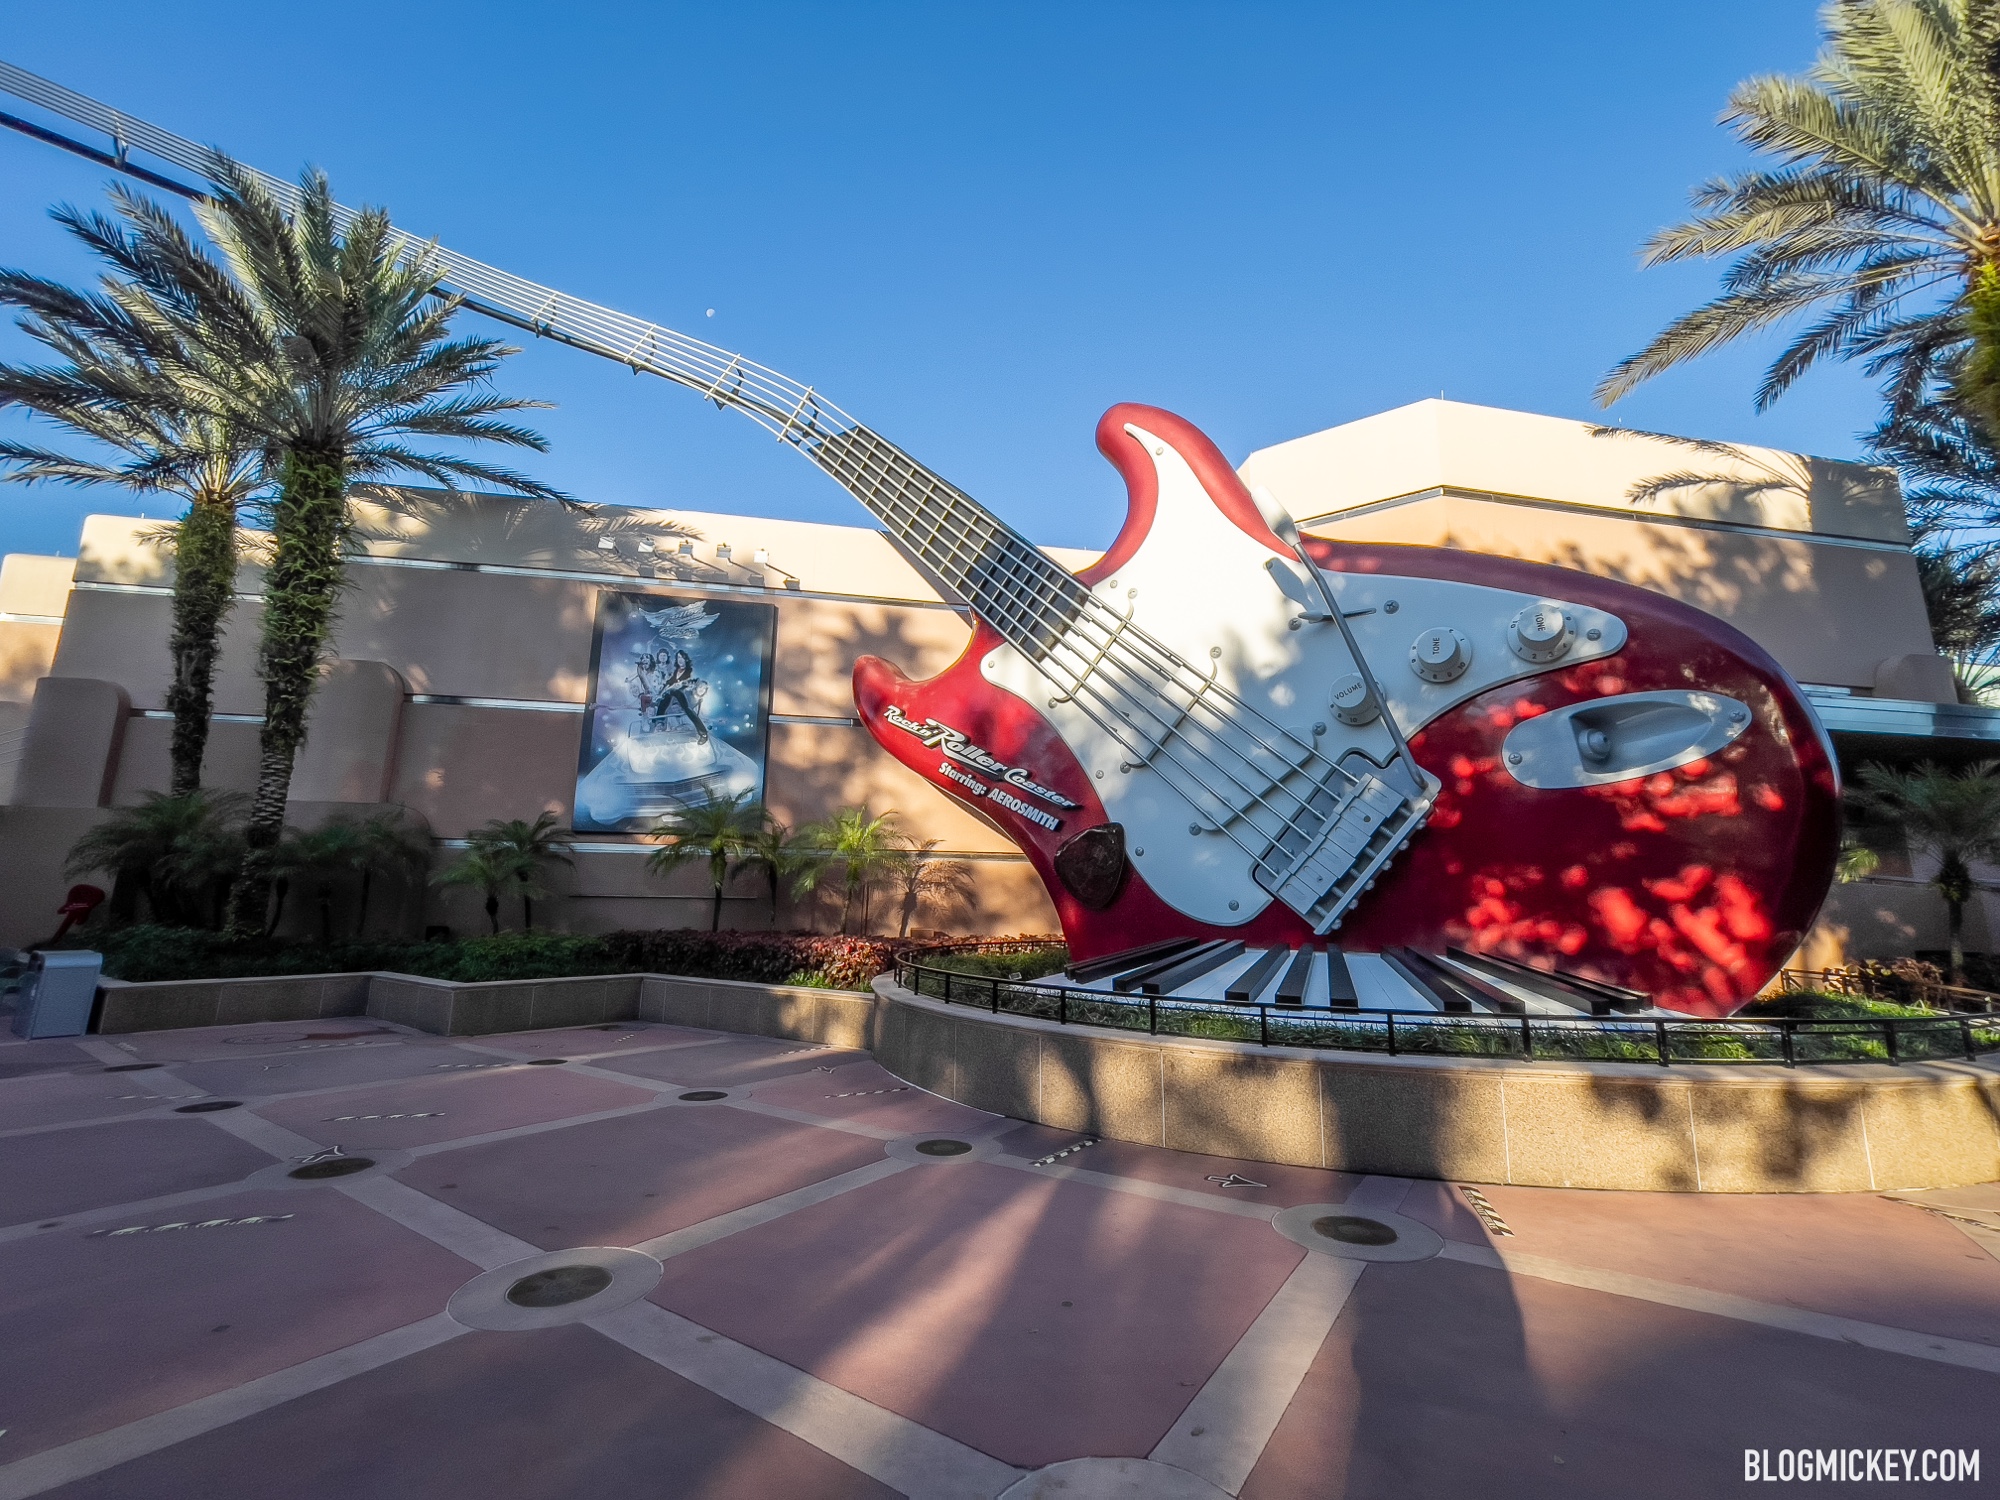 Rock 'N' Roller Coaster - Disney's Hollywood Studios